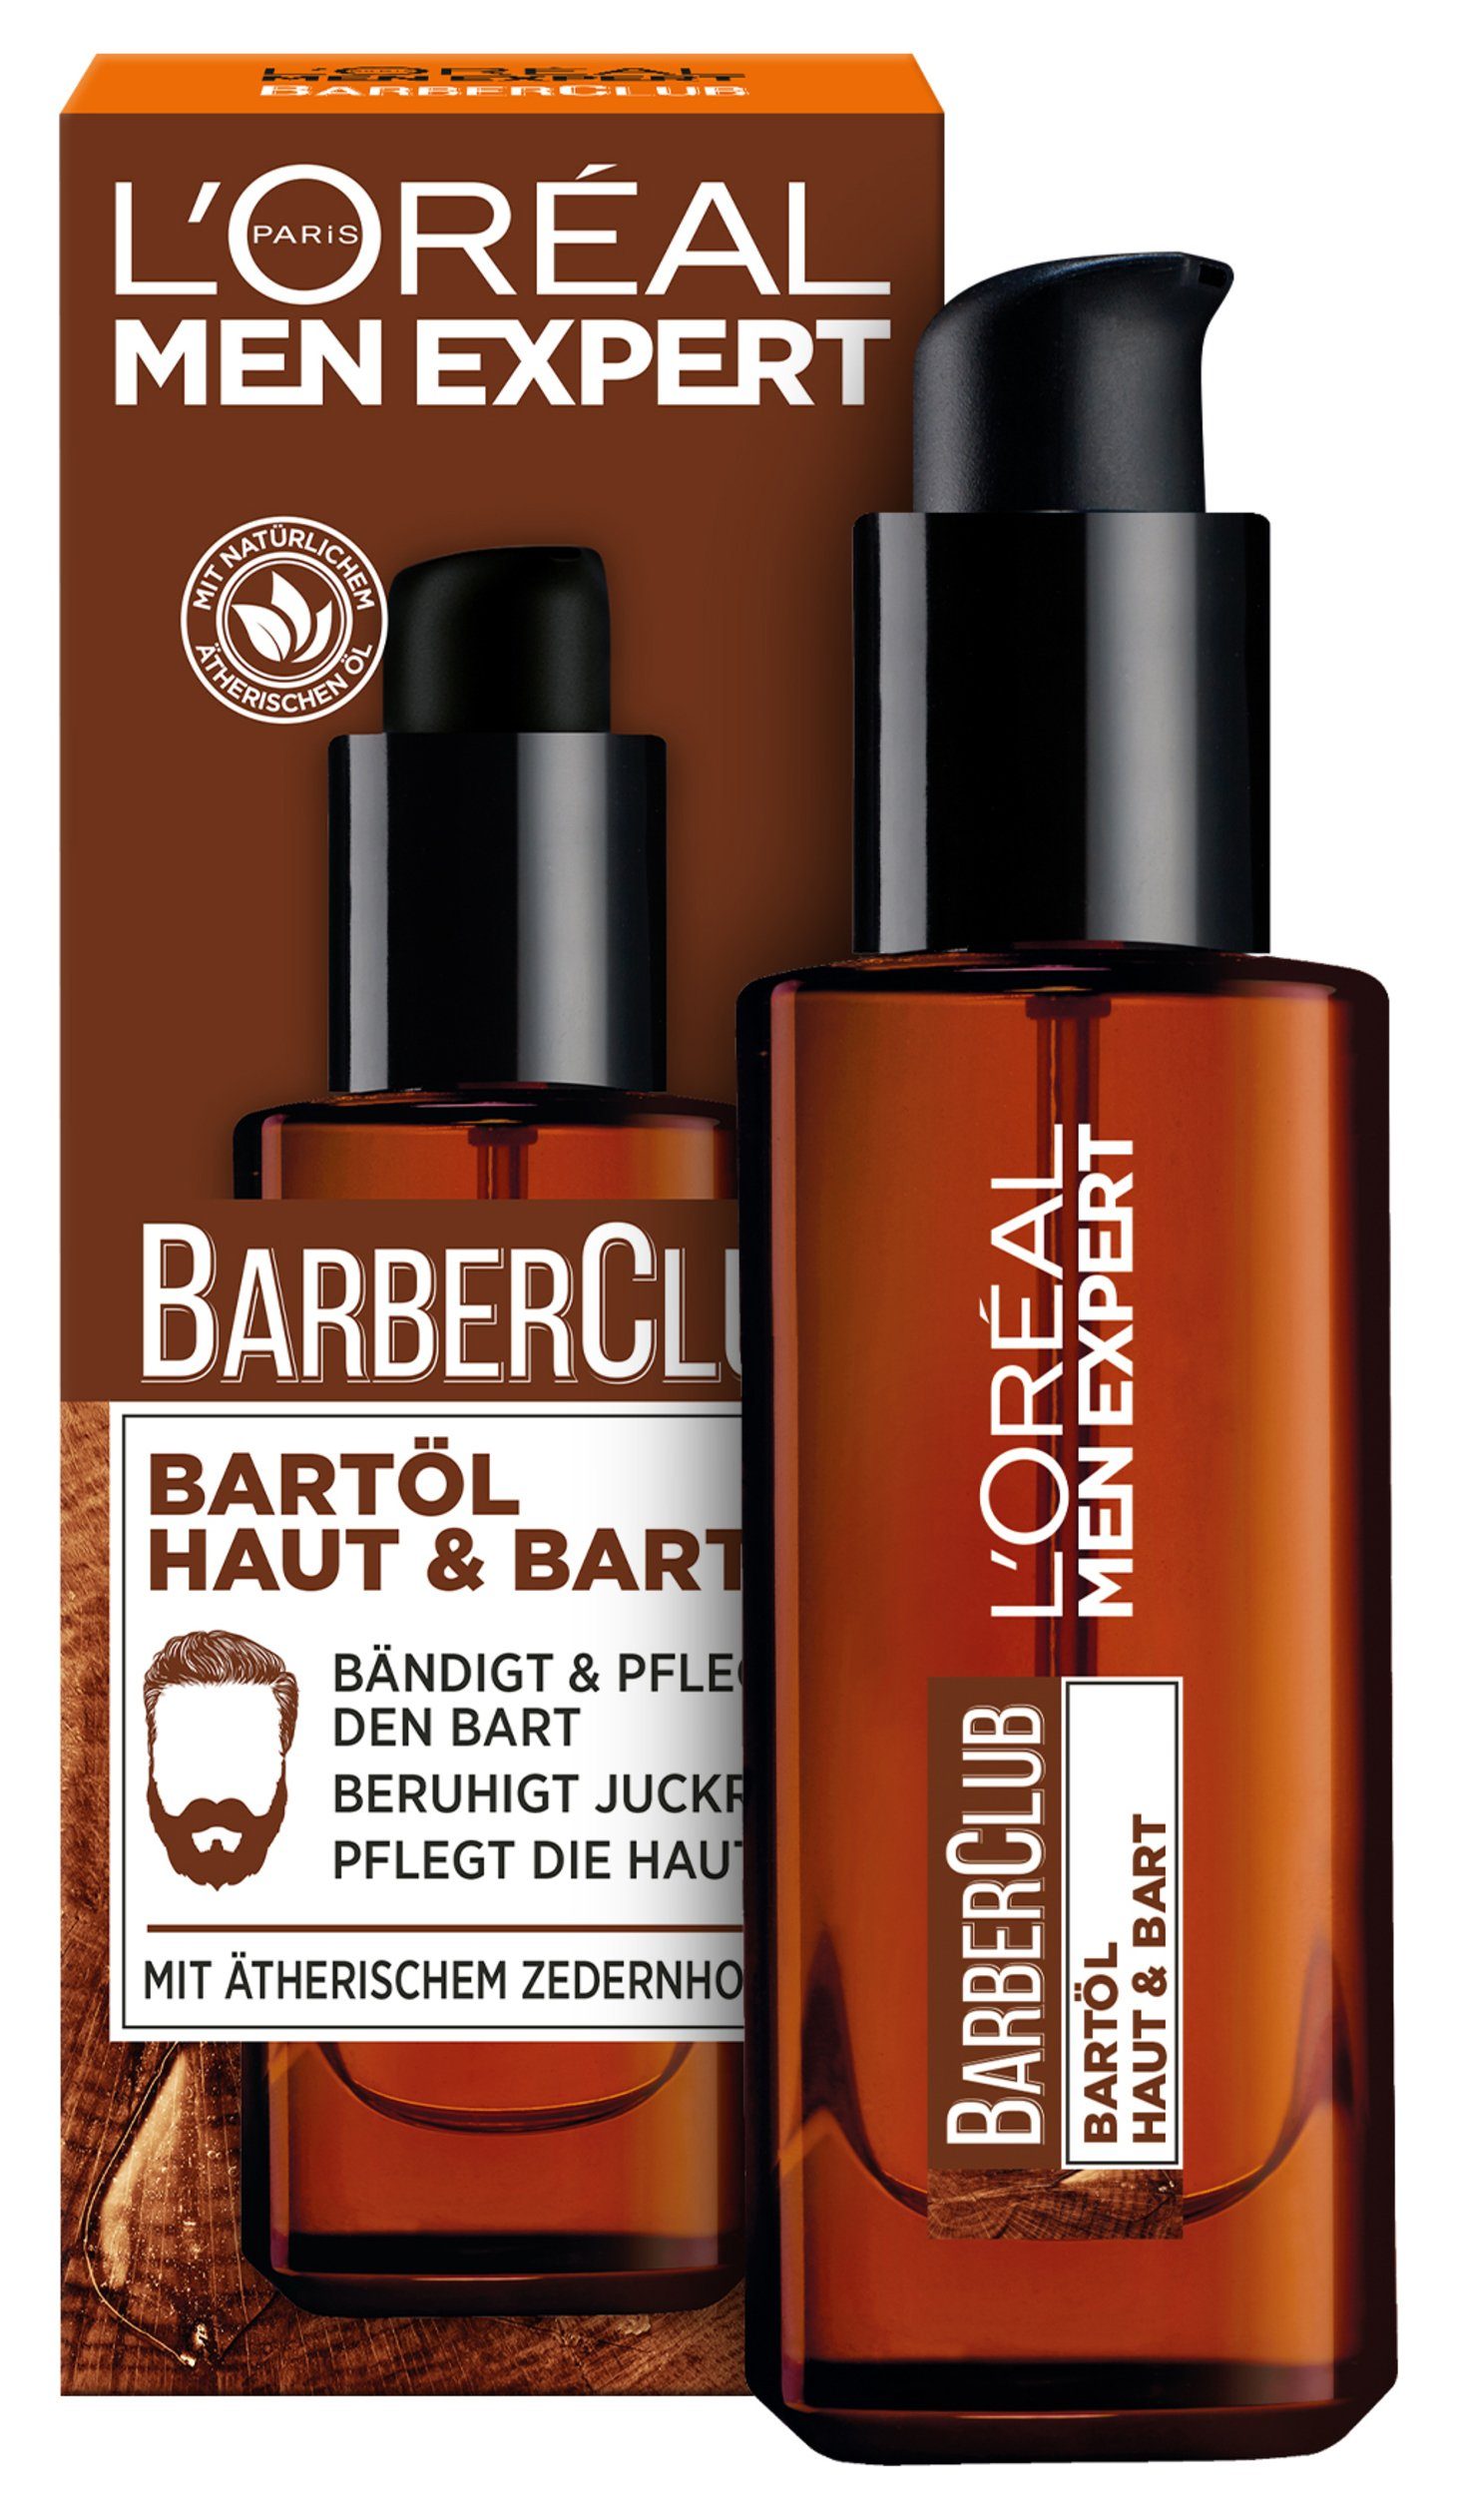 Barber MEN EXPERT L'ORÉAL Zedernholzöl mit Bartöl Juckreiz; Club, ohne Bart PARIS gepflegter